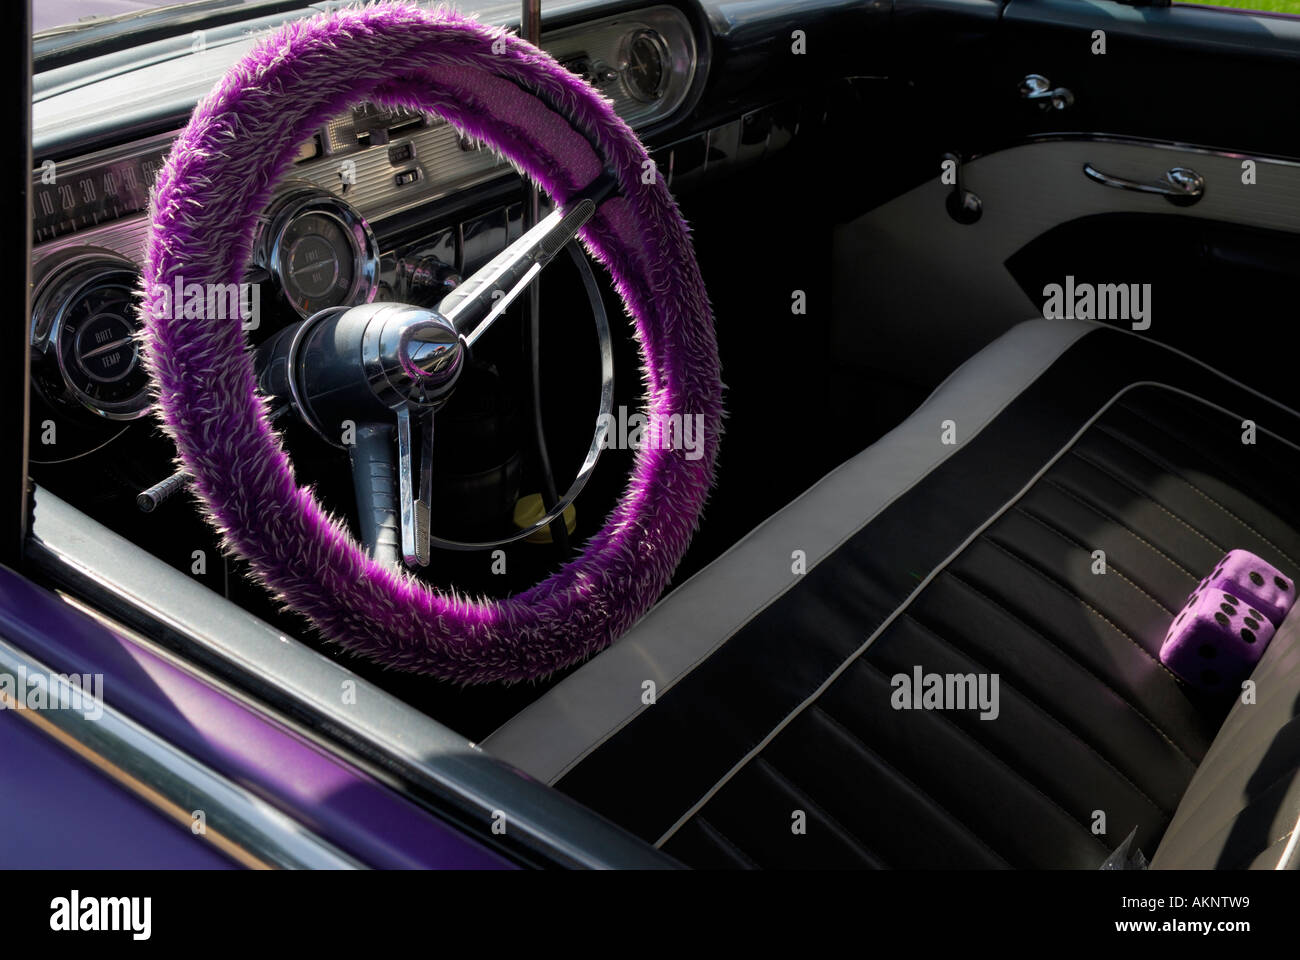 Lenkrad überzug -Fotos und -Bildmaterial in hoher Auflösung – Alamy